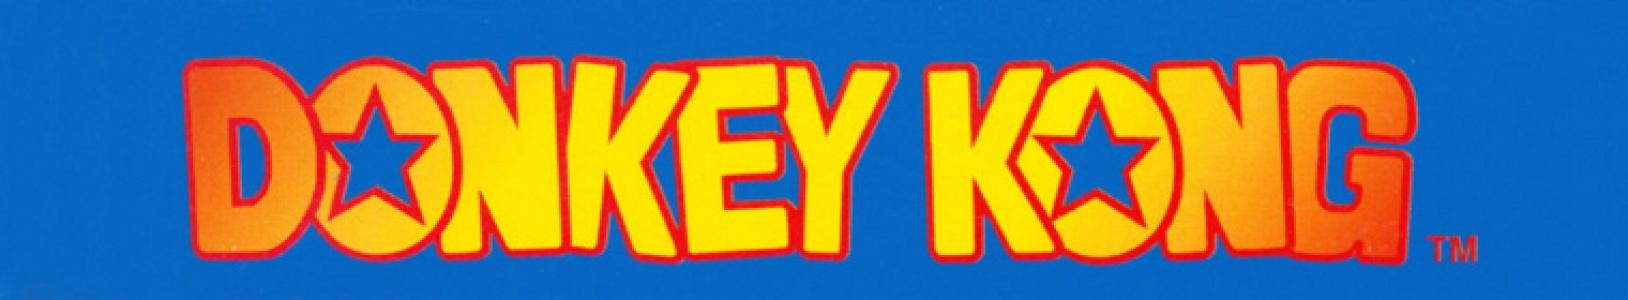 Donkey Kong banner